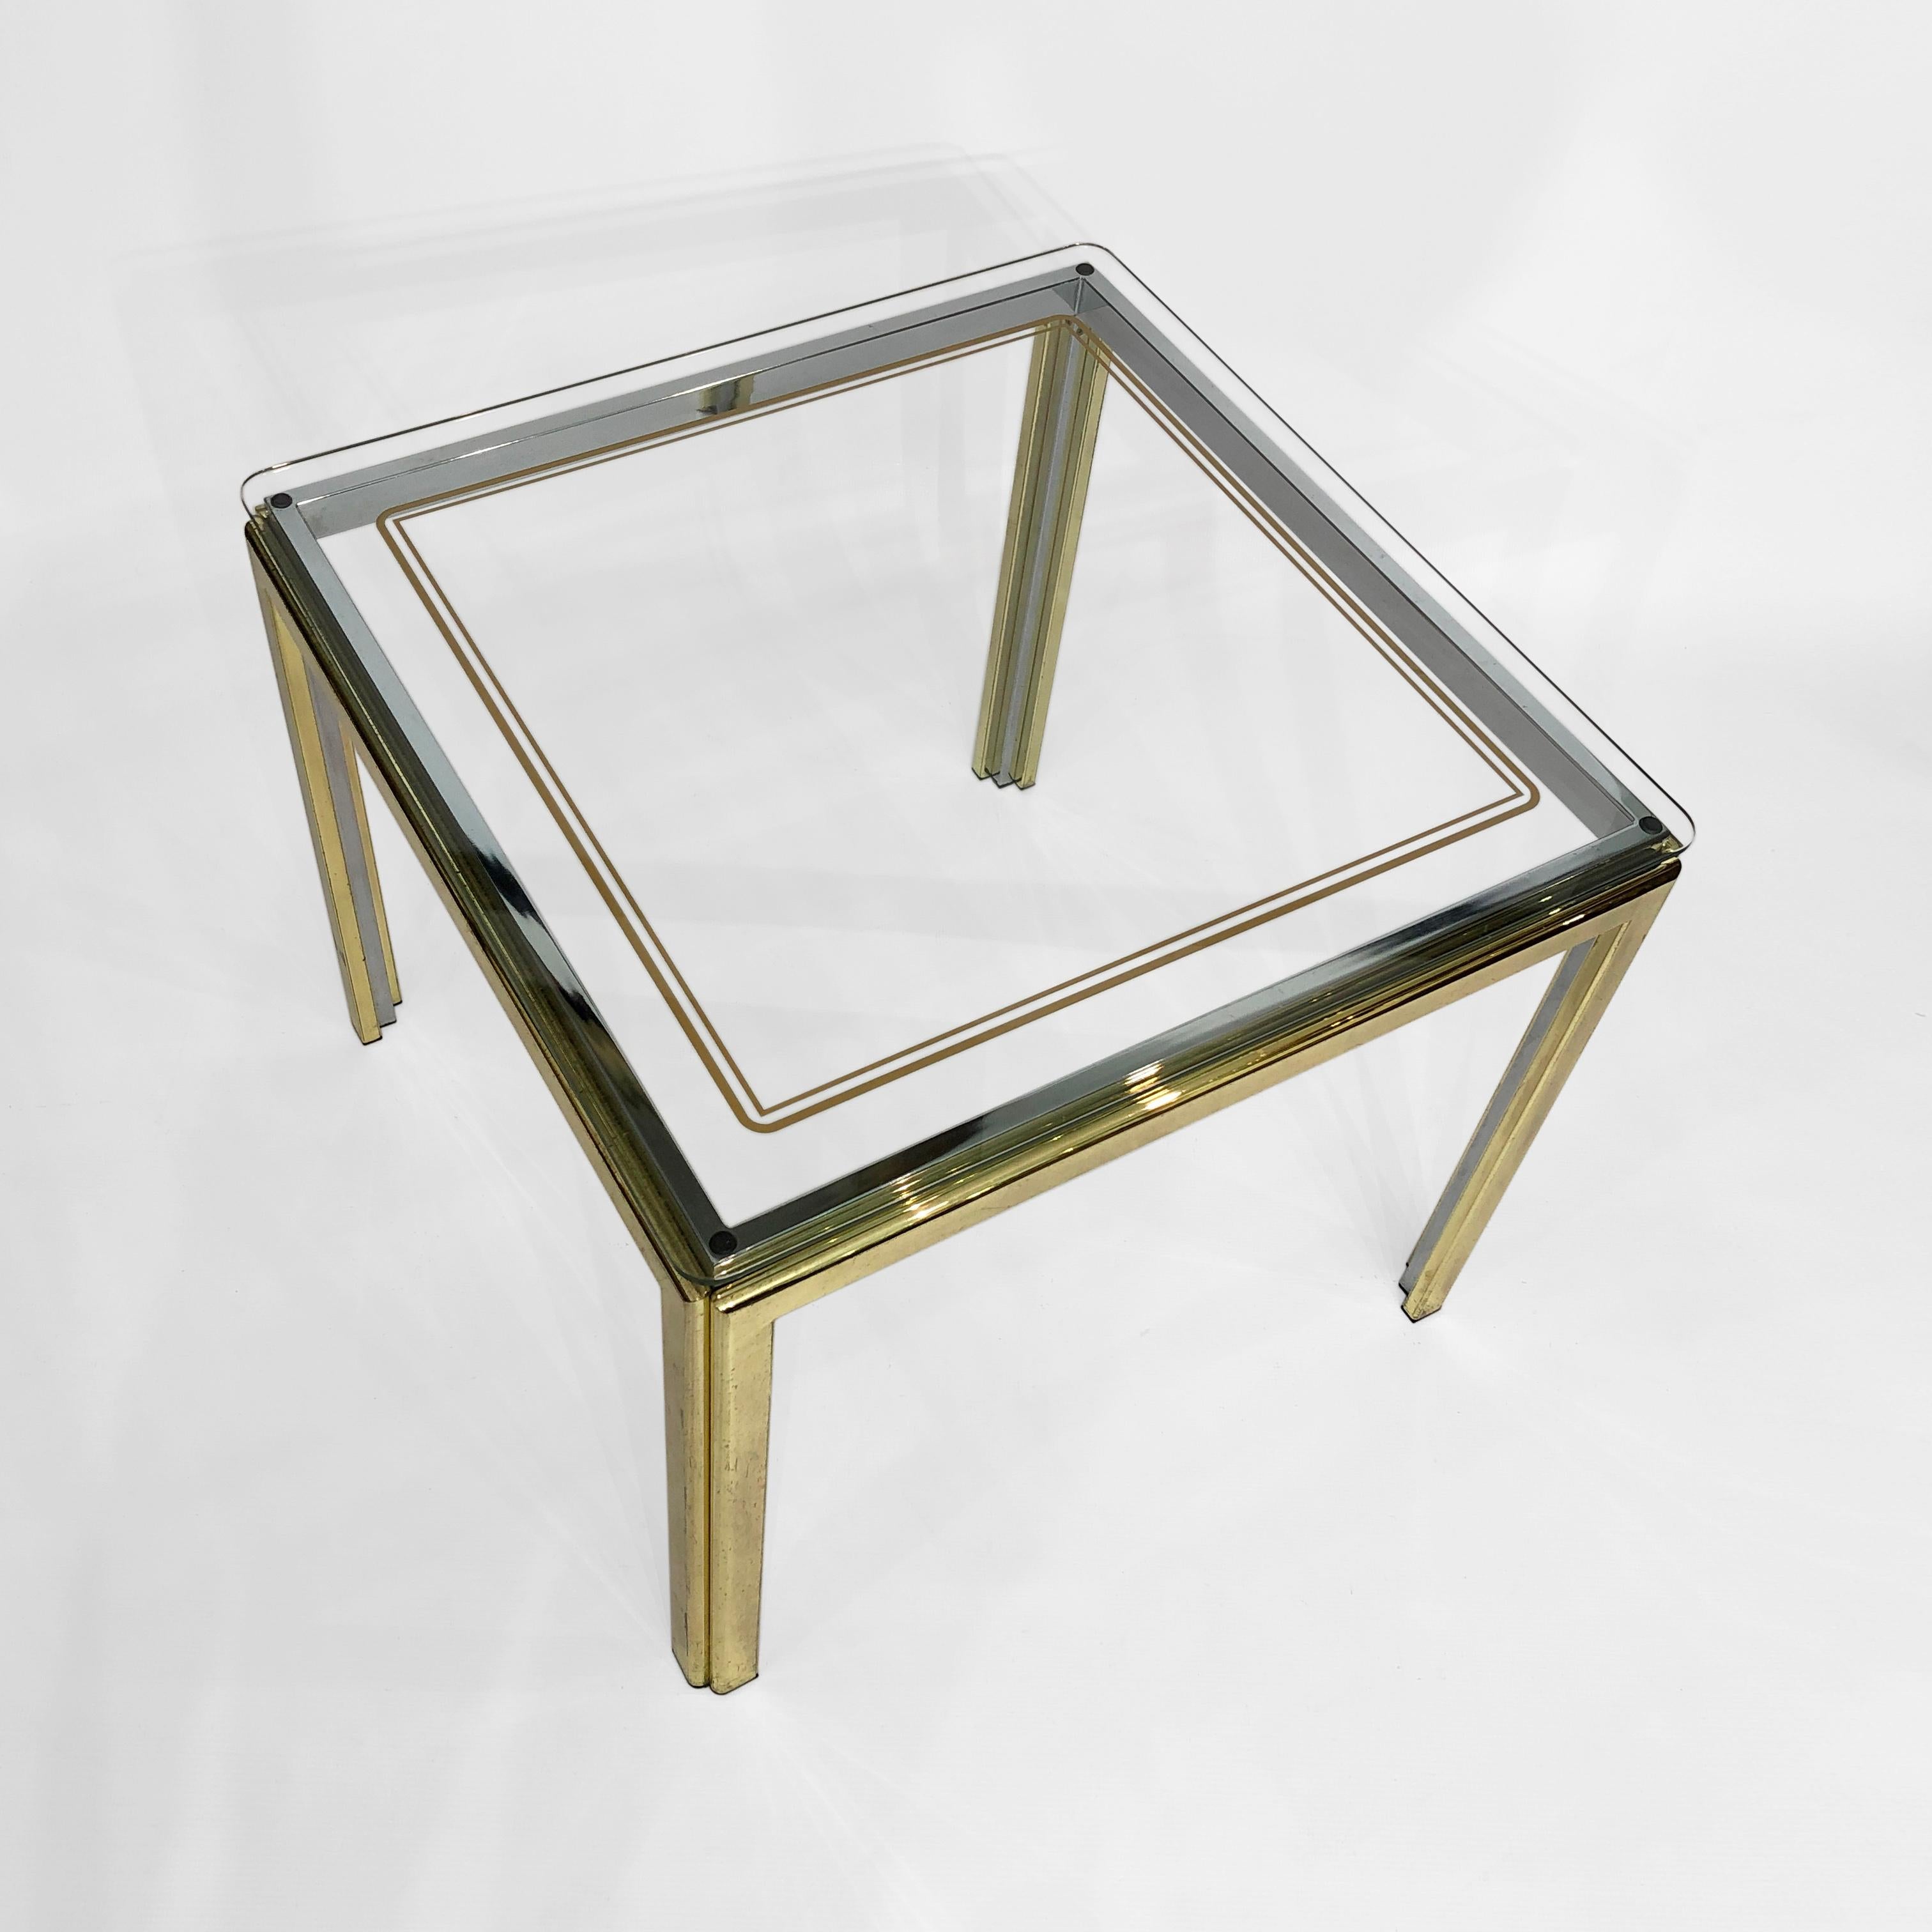 Pair of Side Brass Glass Chrome Tables Renato Zevi Style Hollywood Regency #2 For Sale 1